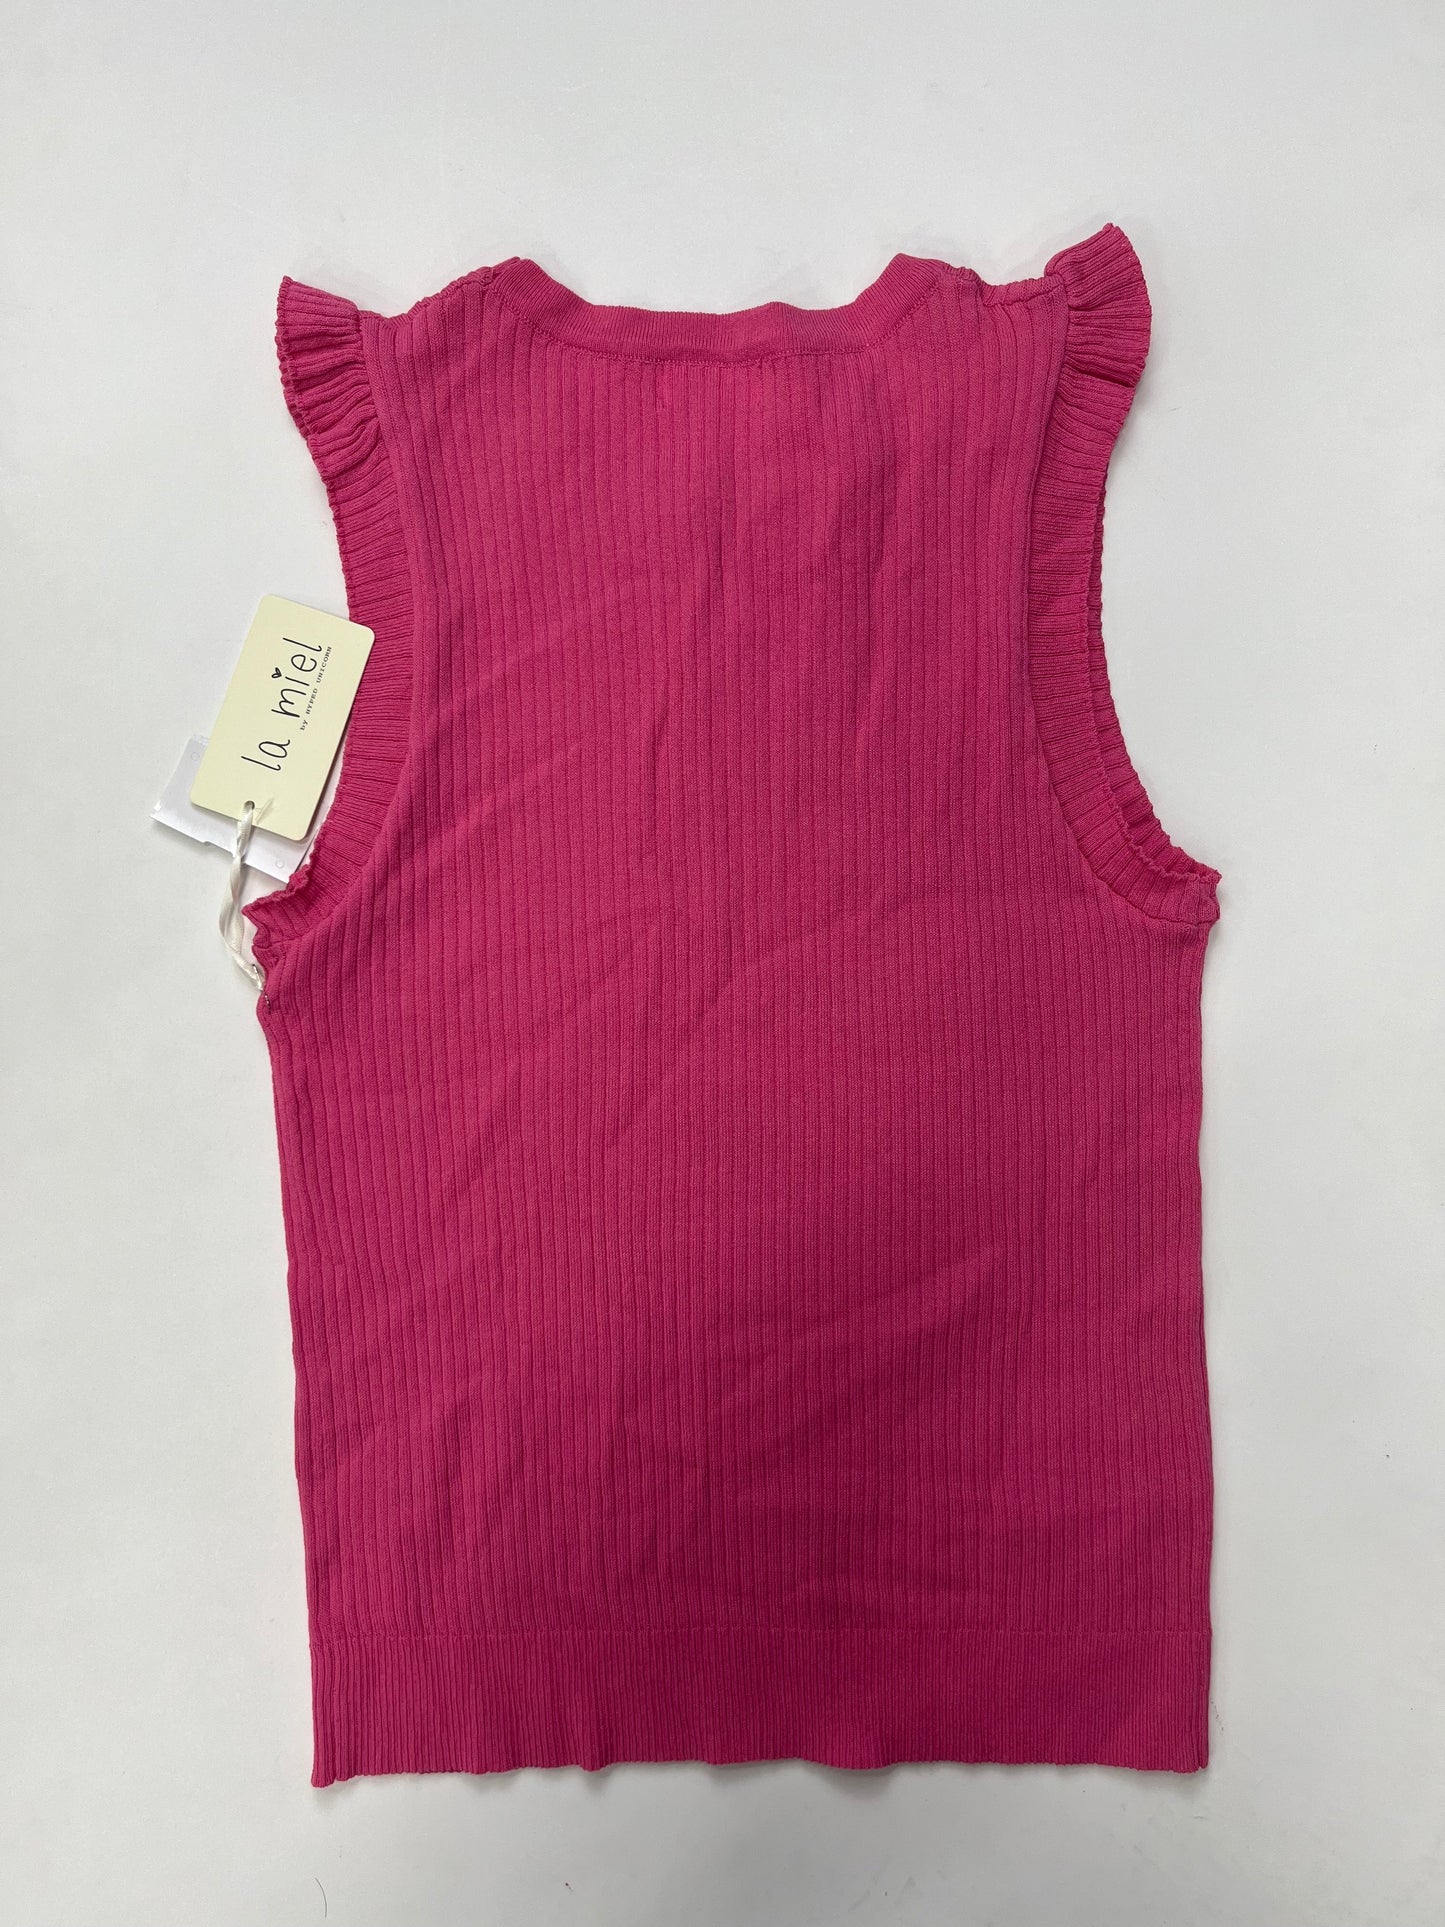 Pink Sweater Short Sleeve La Miel, Size L